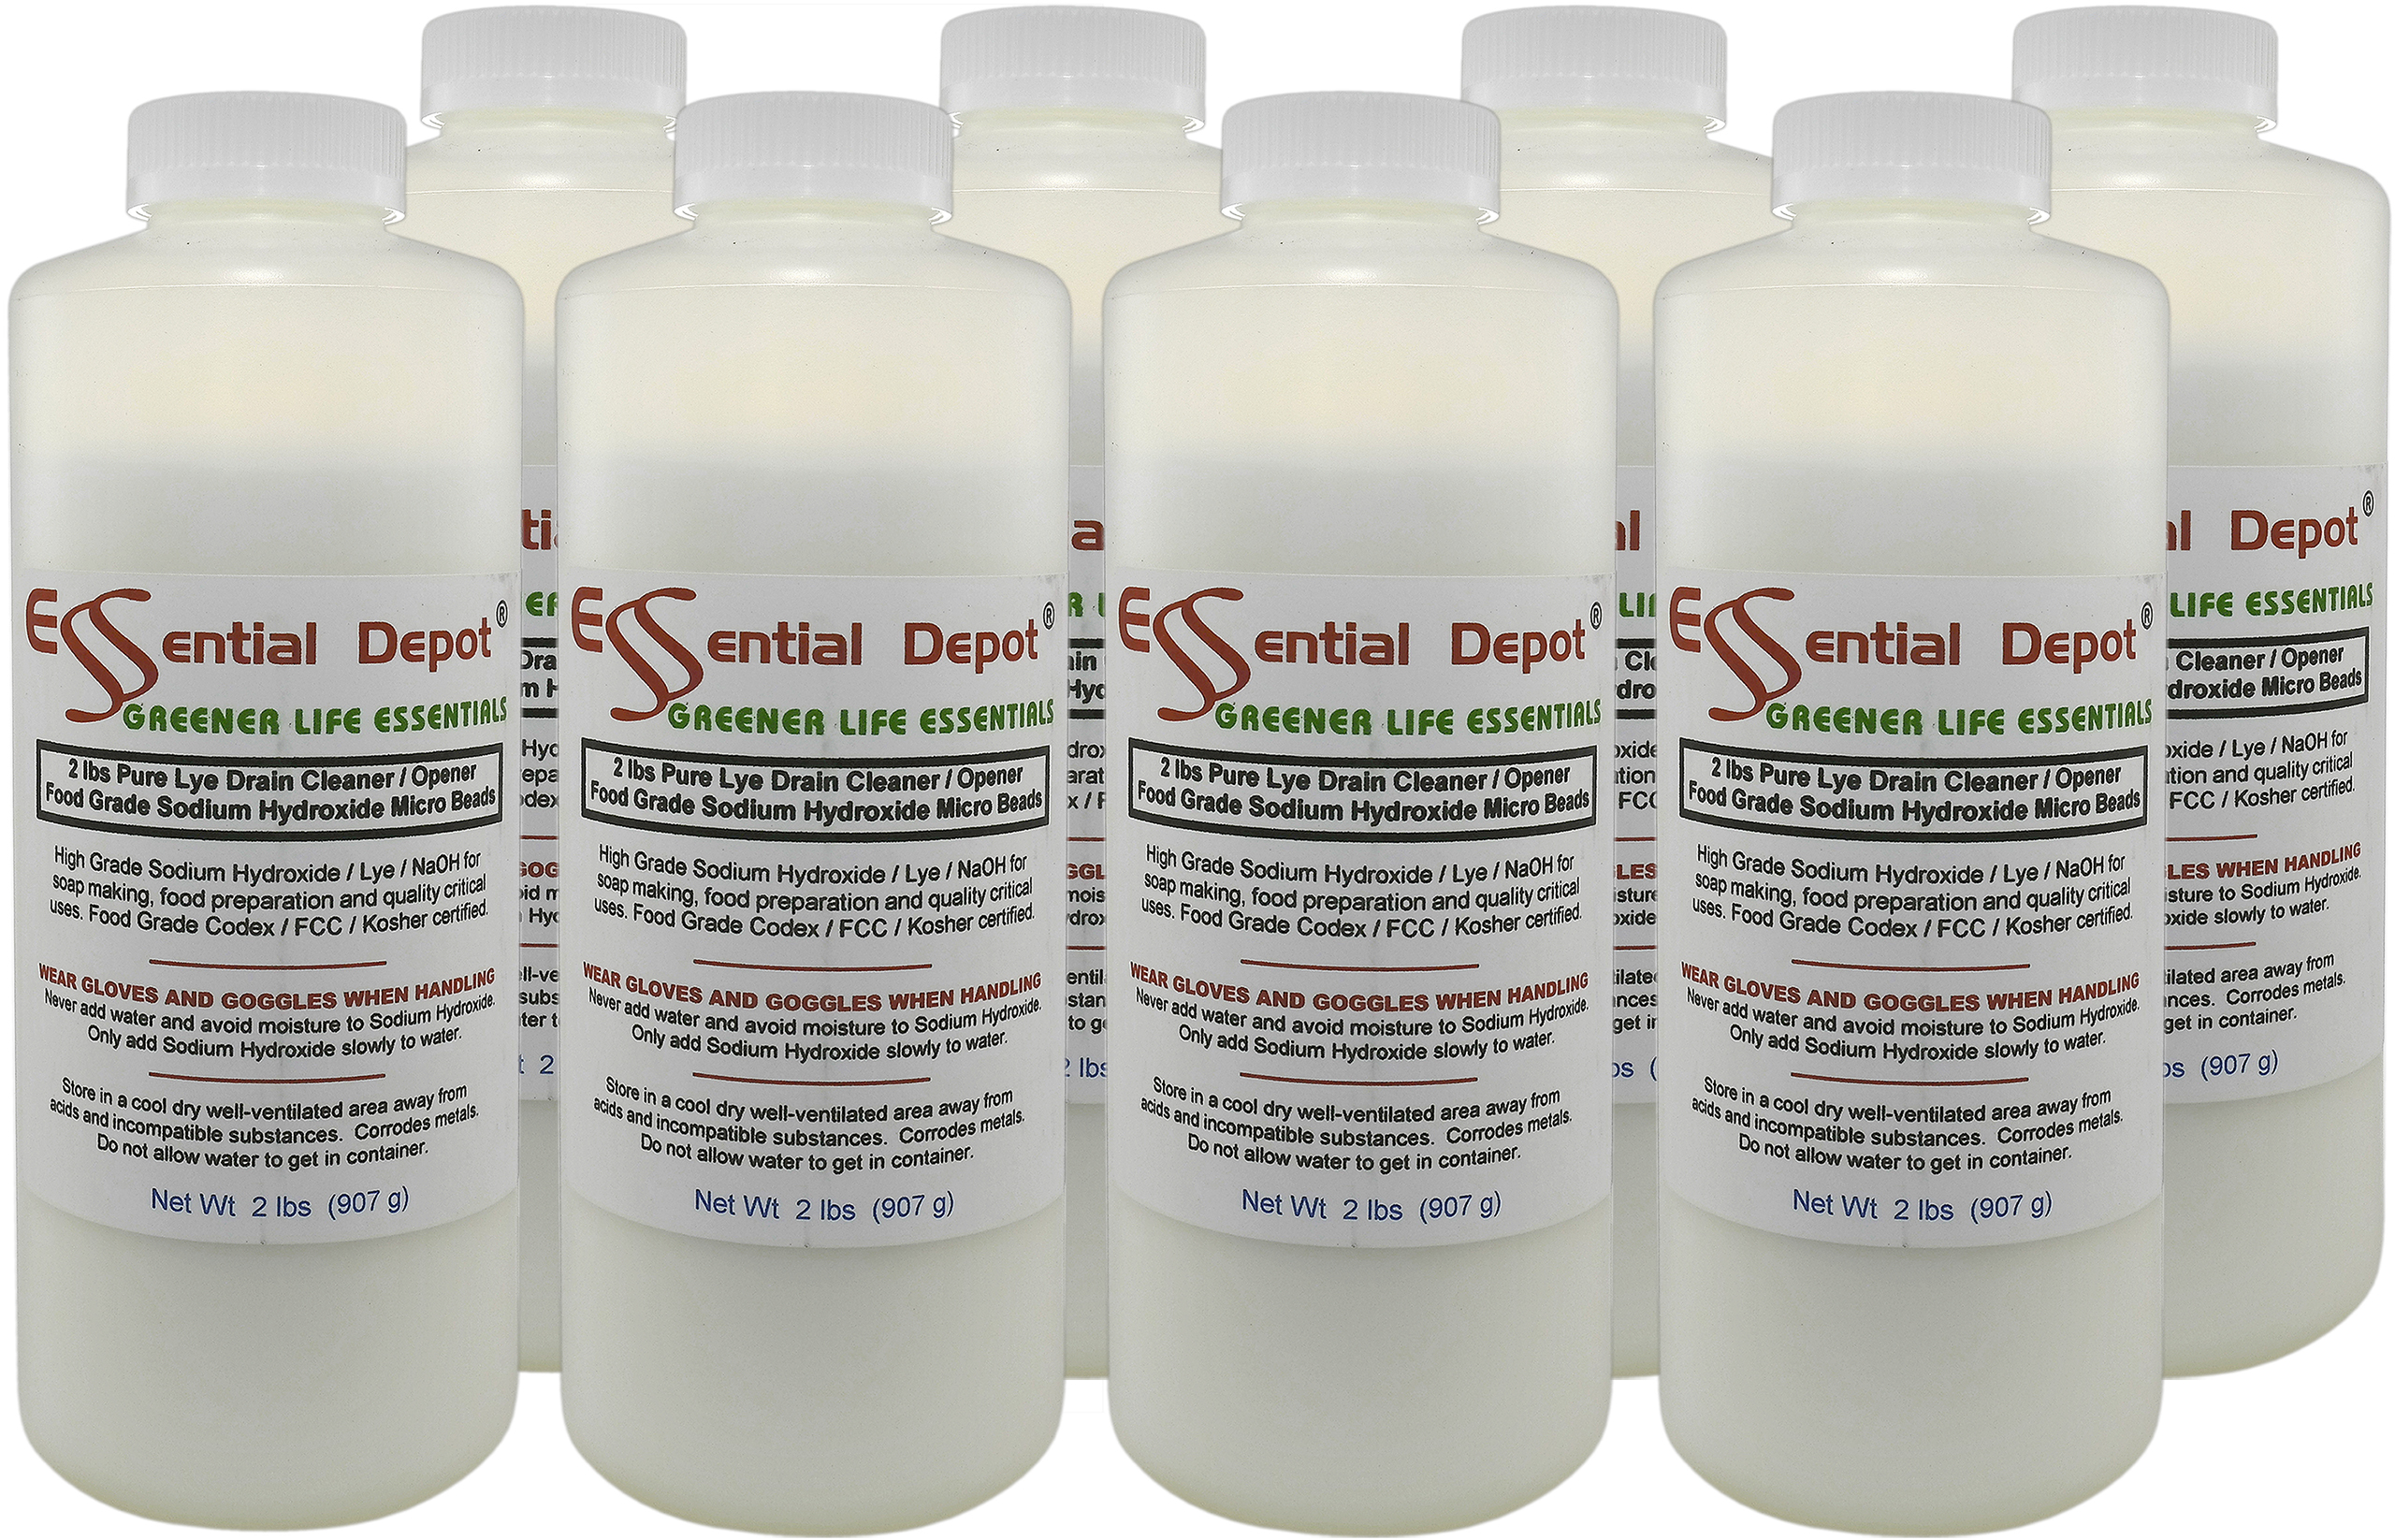 Sodium Hydroxide Lye Micro Beads - Food Grade - USP - 16 lbs - 8 x 2lb  Bottles: Essential Depot